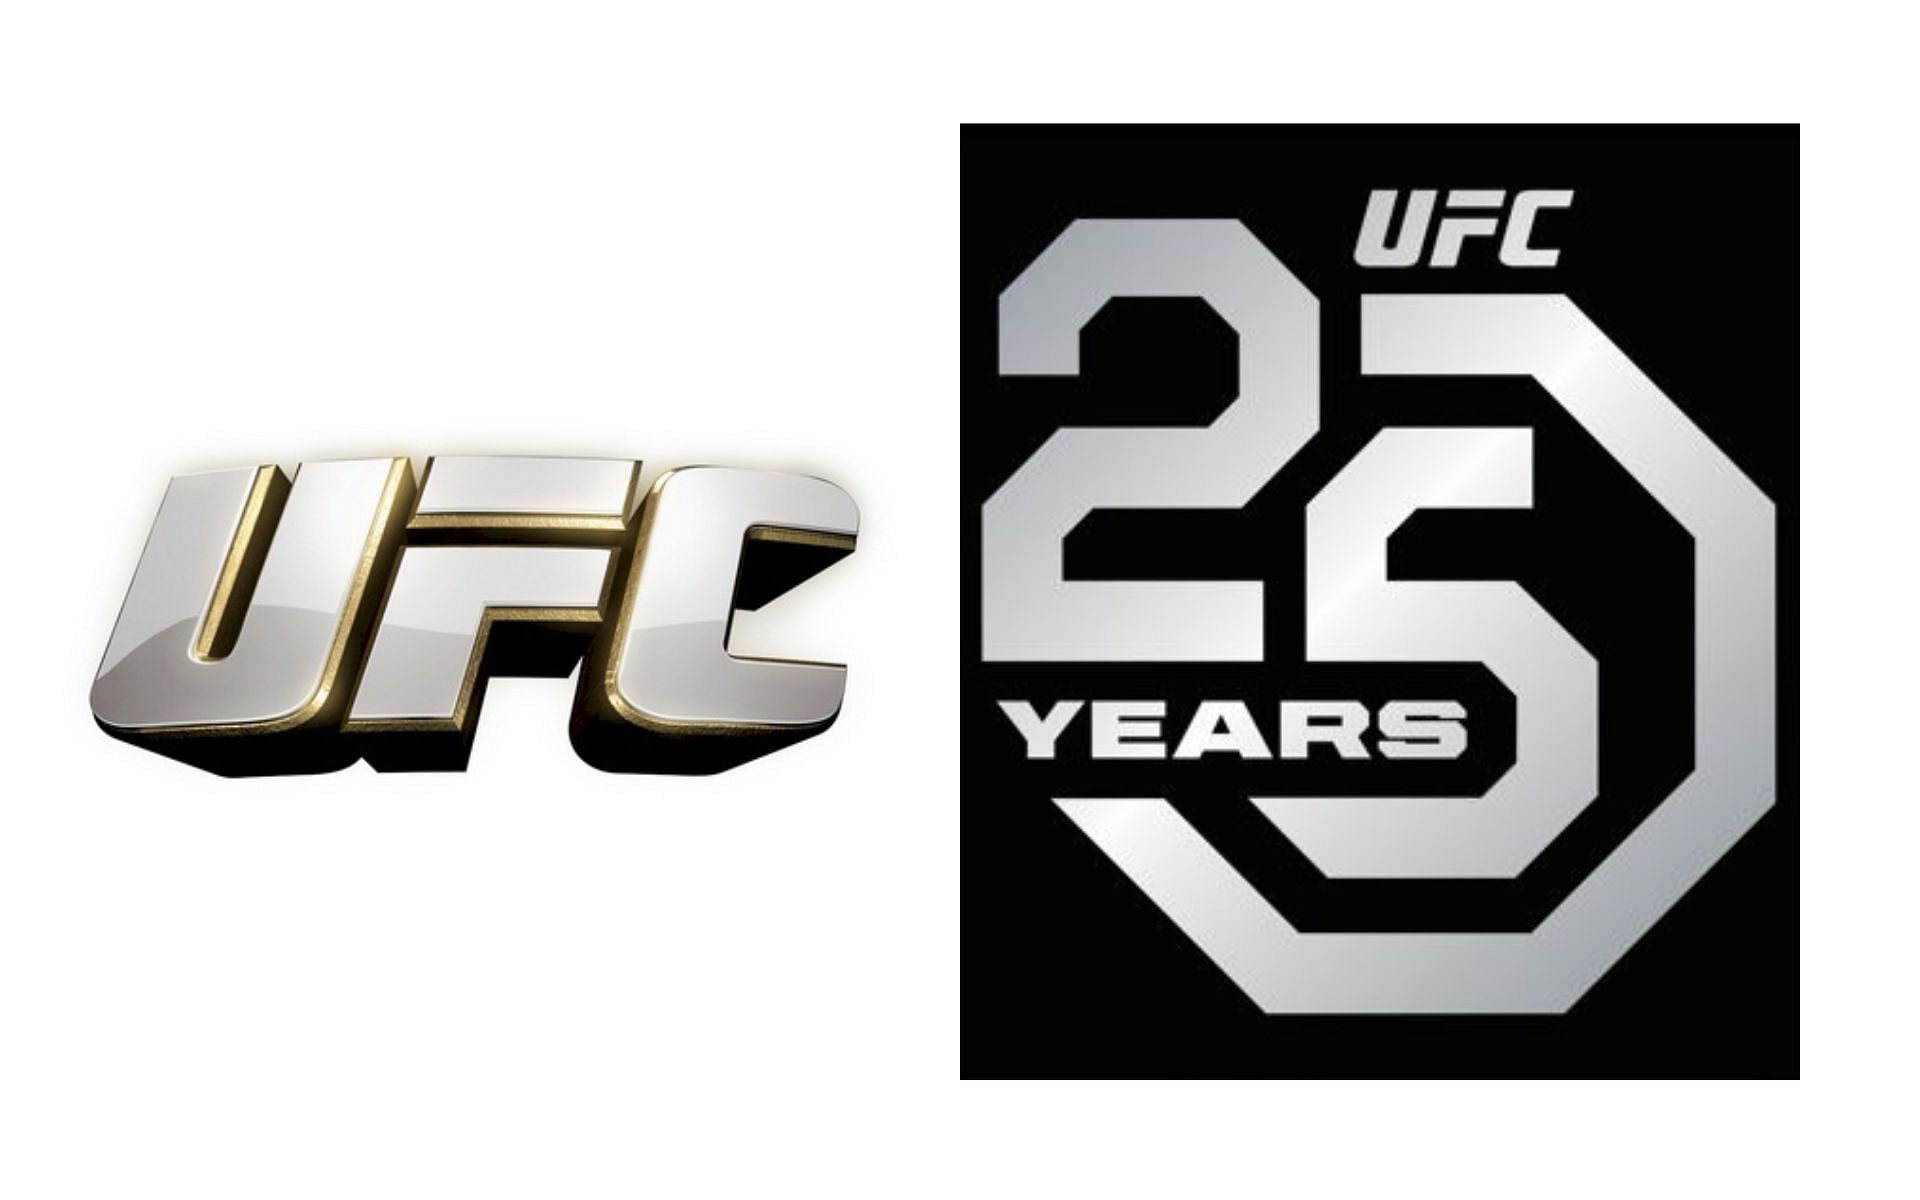 Curved logo [Left] 25th anniversary logo [Right] [Image courtesy: www.logomyway.com]